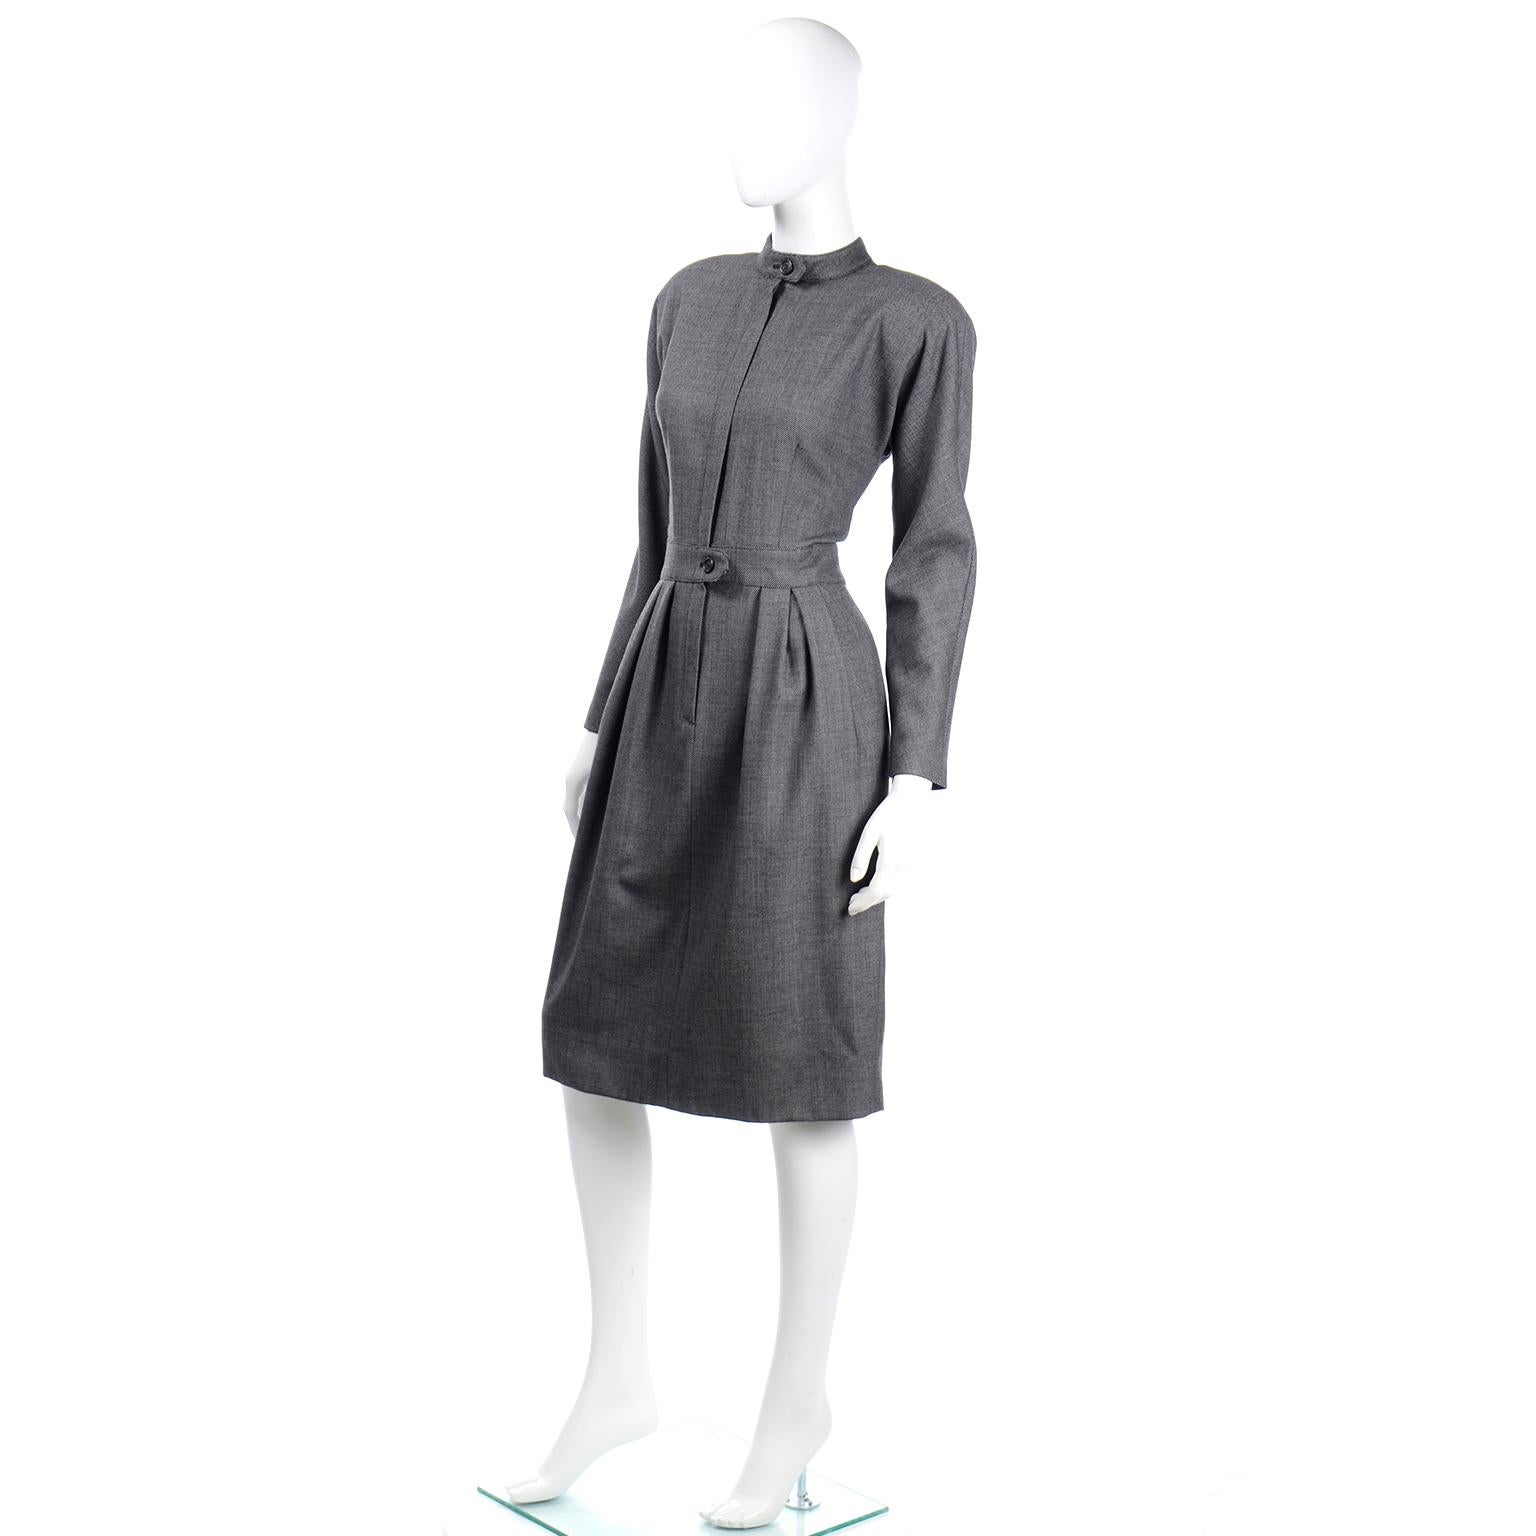 Women's Geoffrey Beene Vintage Dress in Black Micro Check Wool with Unique Seam Details